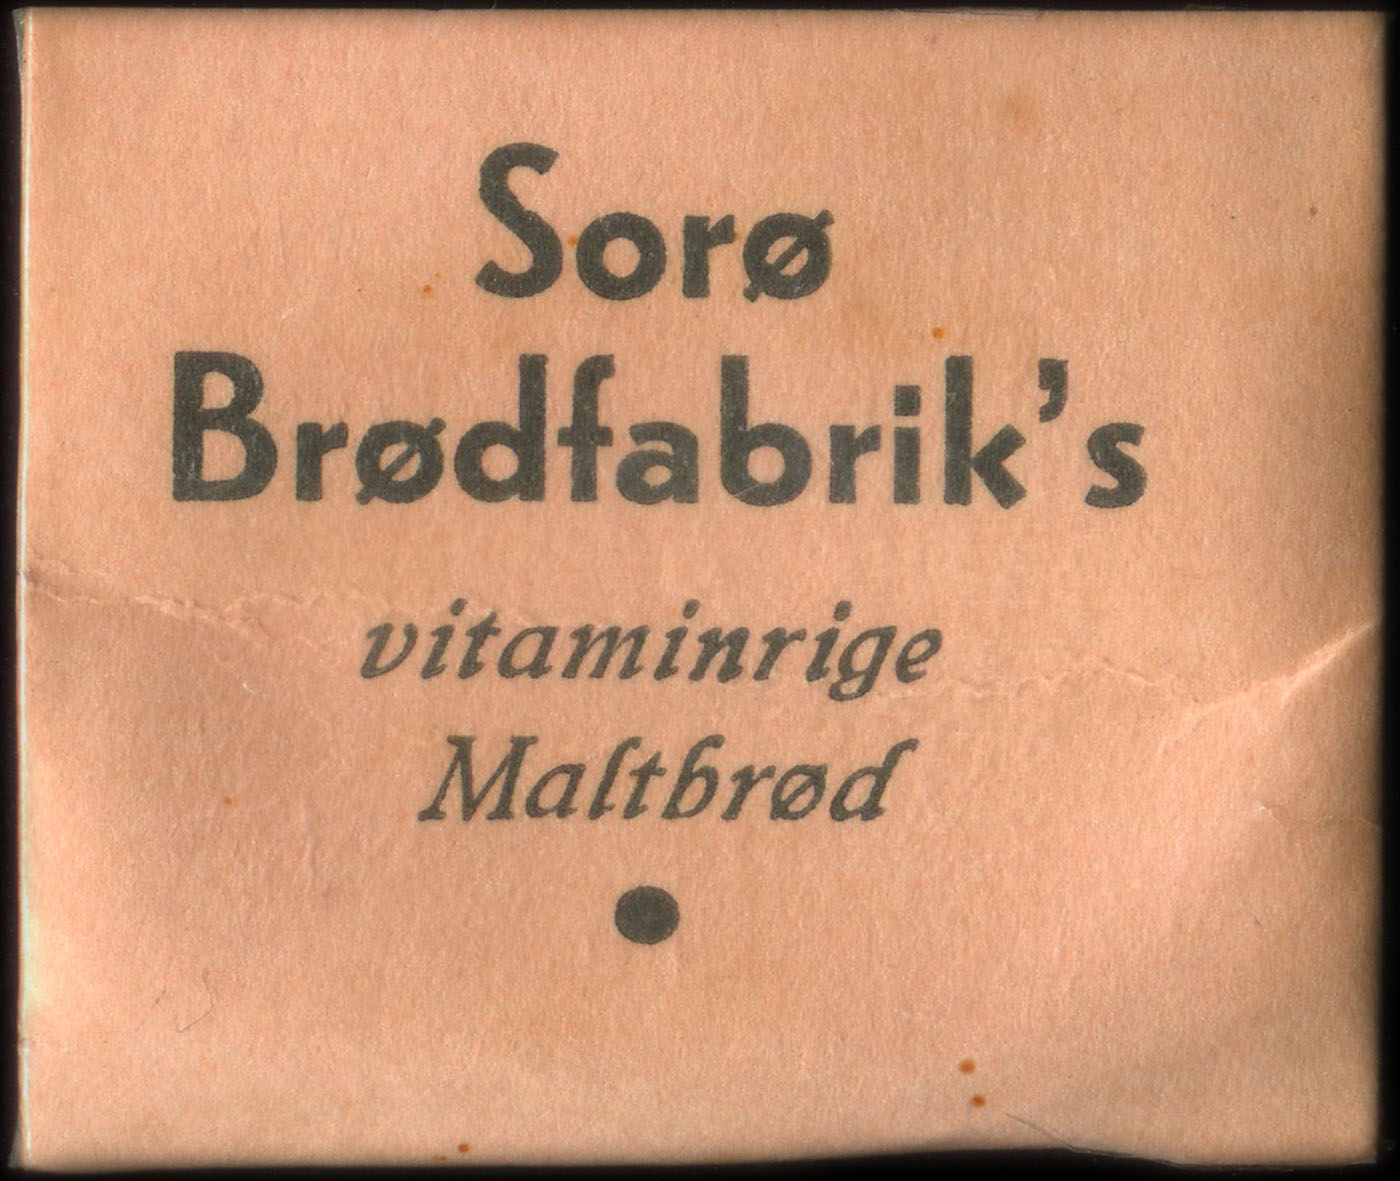 Timbre-monnaie Sorø Brødfabrik's vitaminrige Maltbrød - Danemark